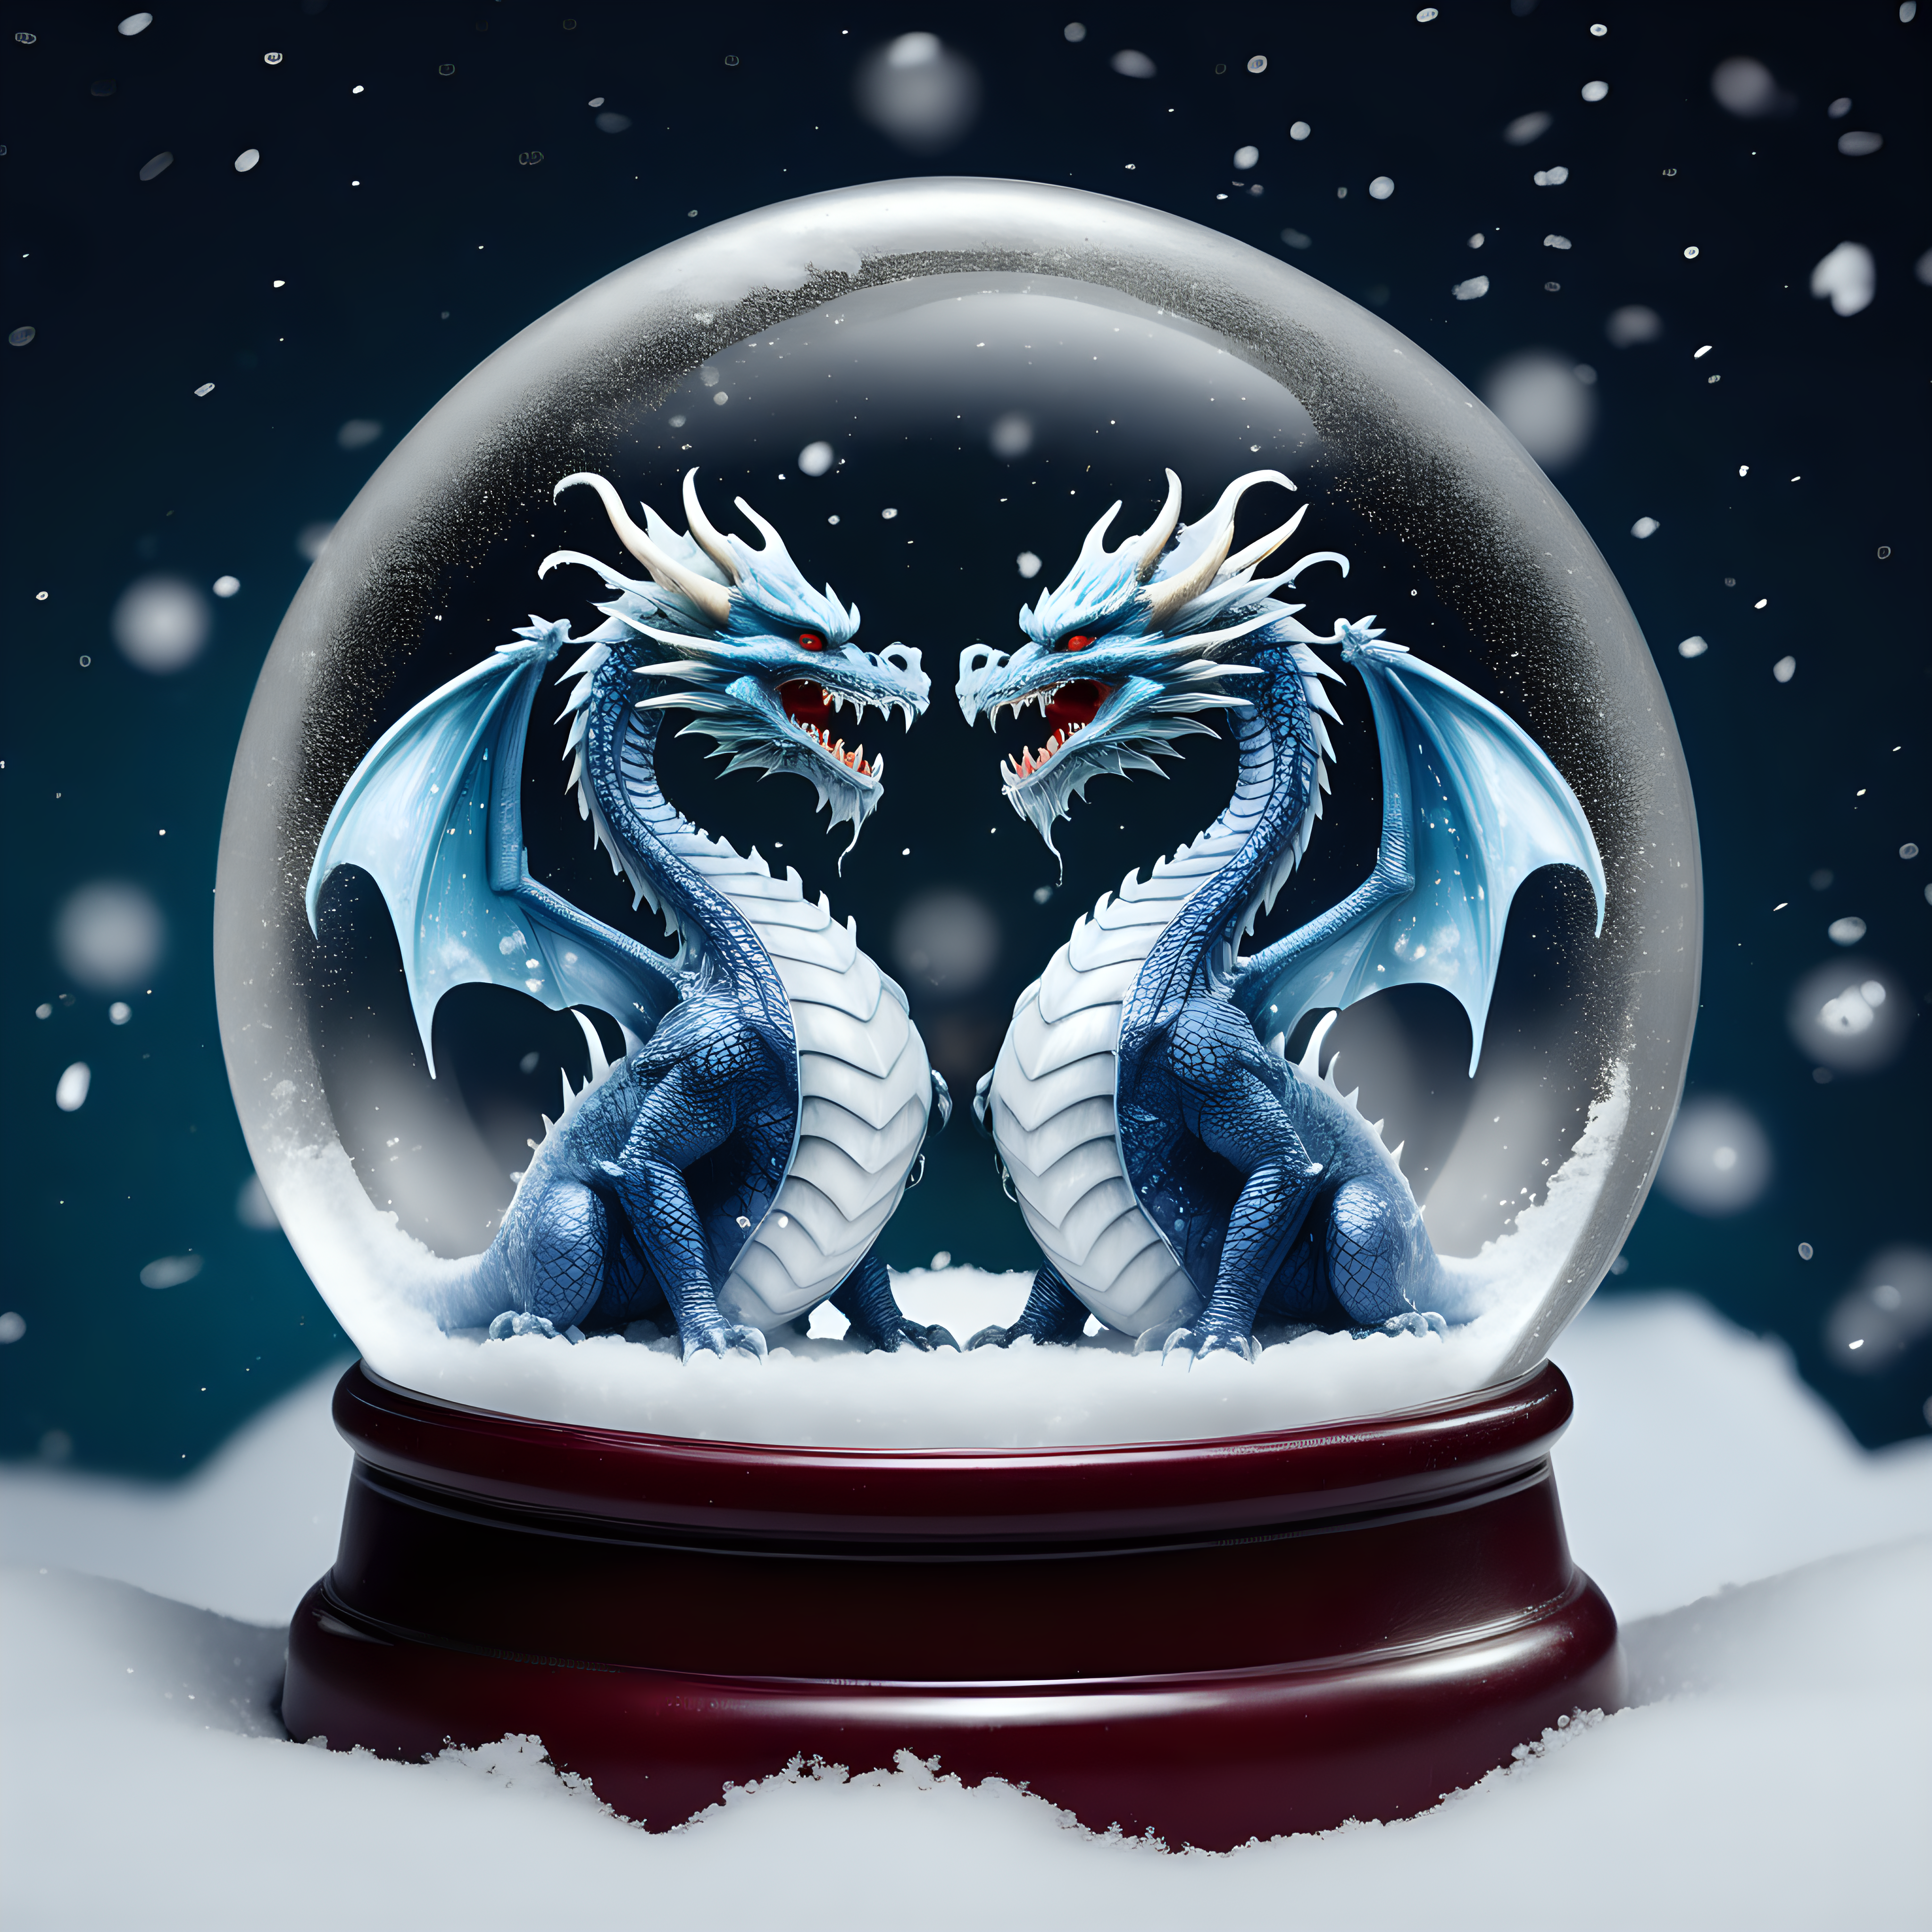 2 headed dragon in a snow globe